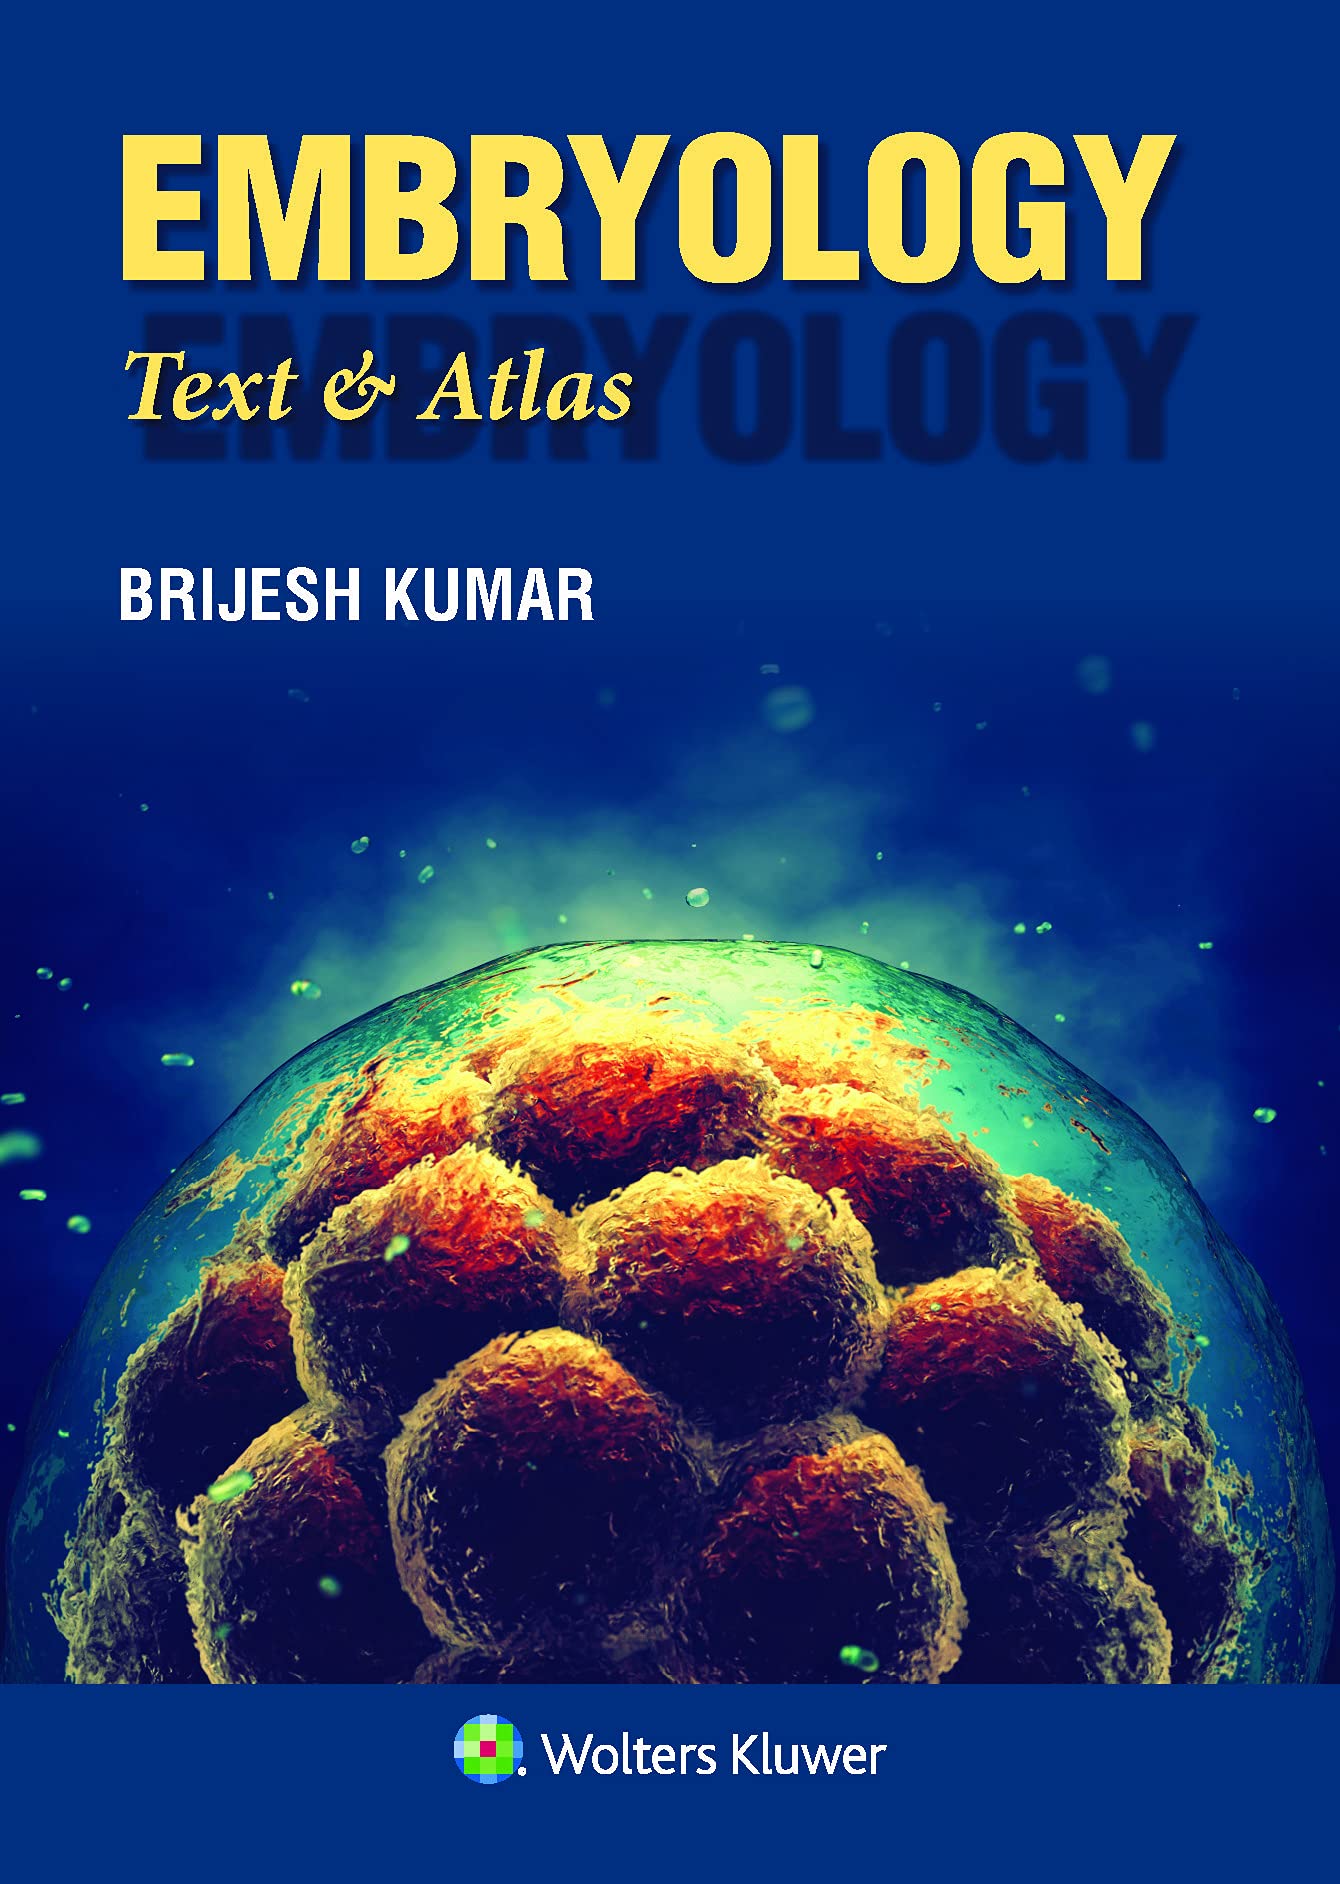 Embryology: Text & Atlas by Brijesh Kumar